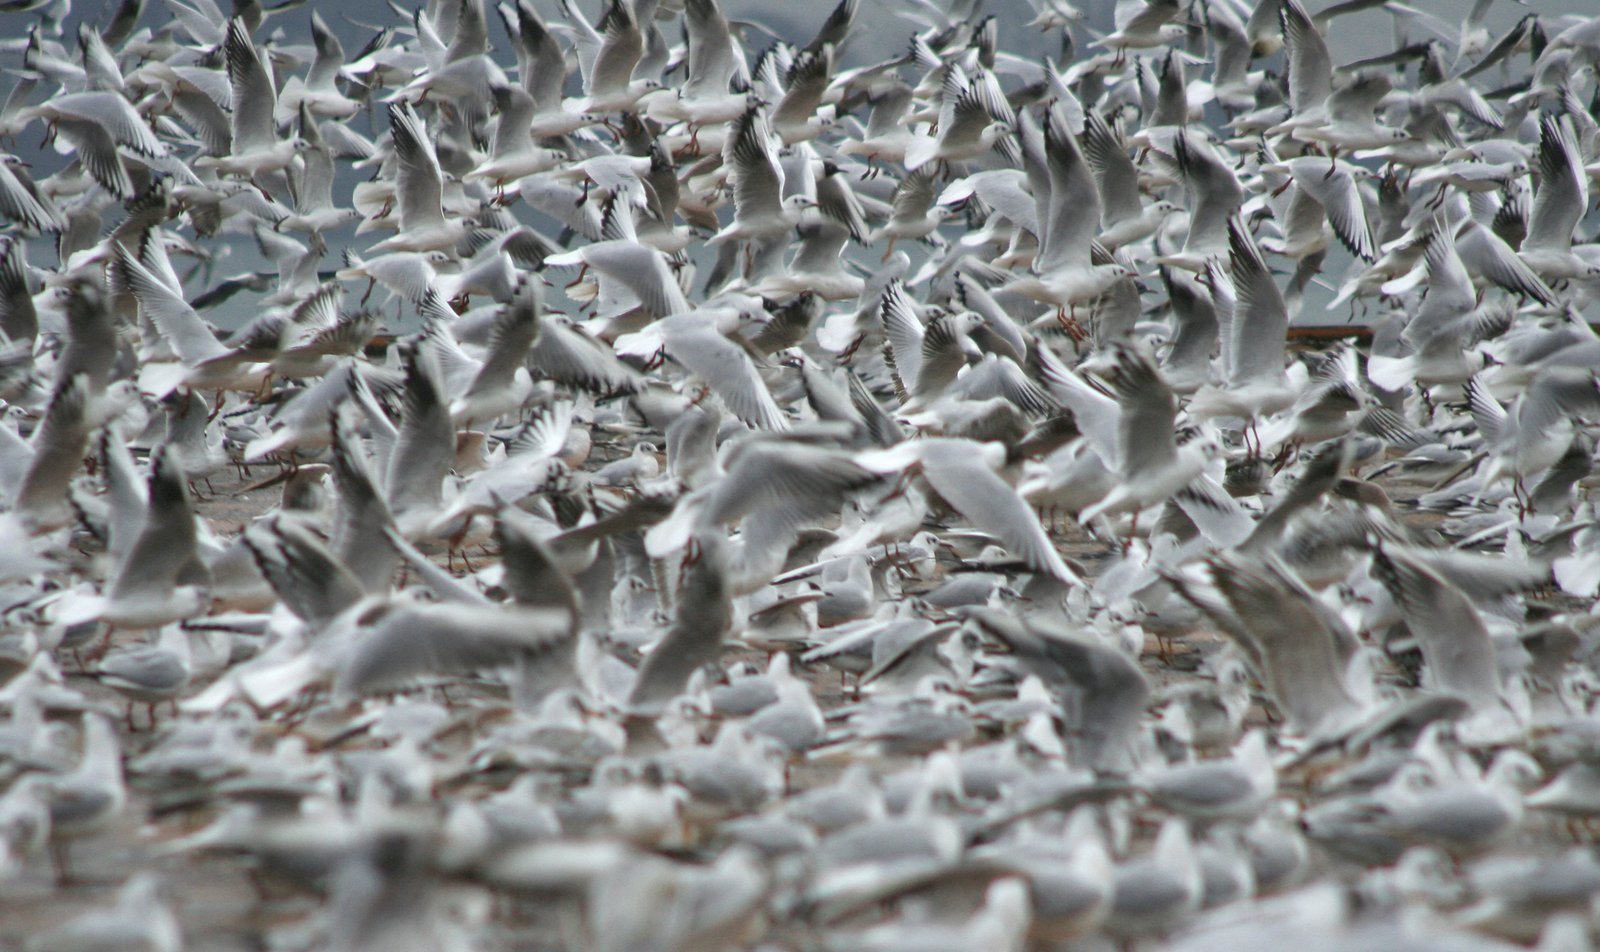 hundreds of seagulls swarming around in flight